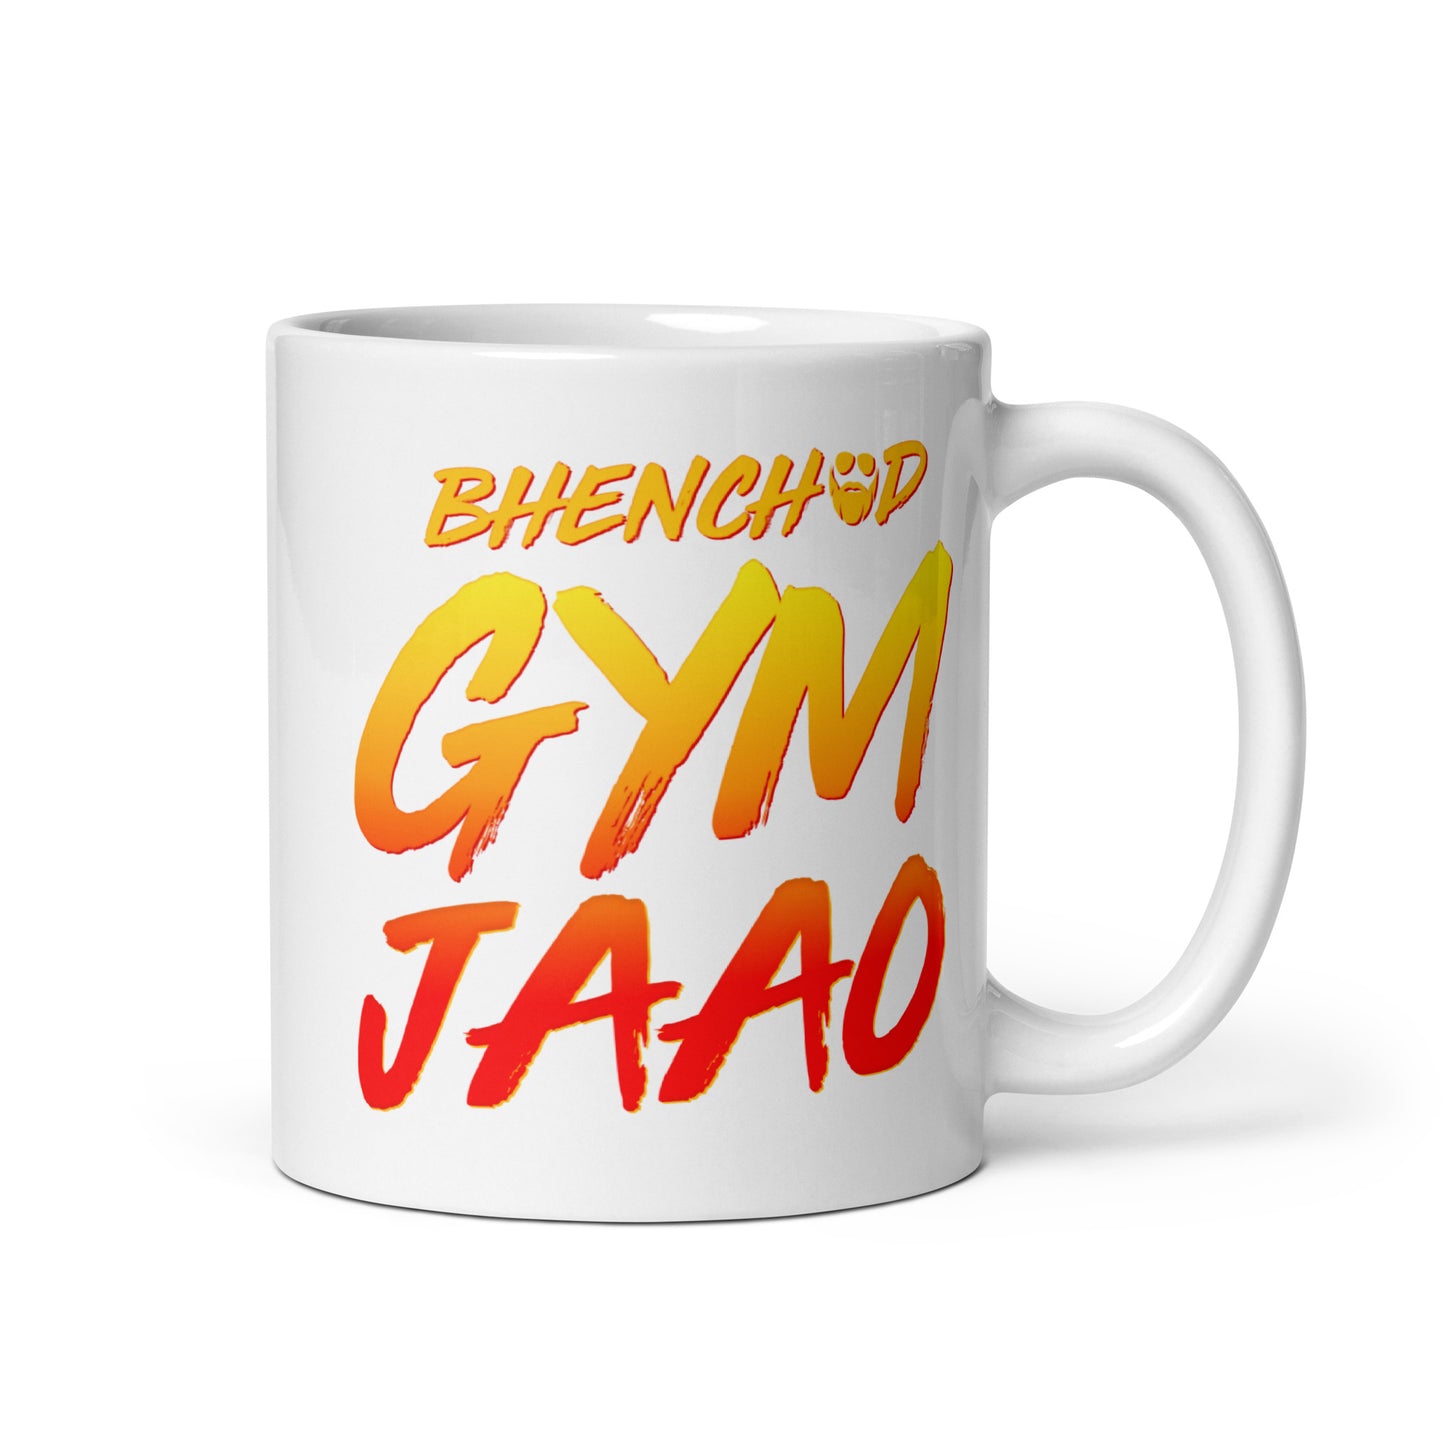 Bhenchod Gym Jaao Mug